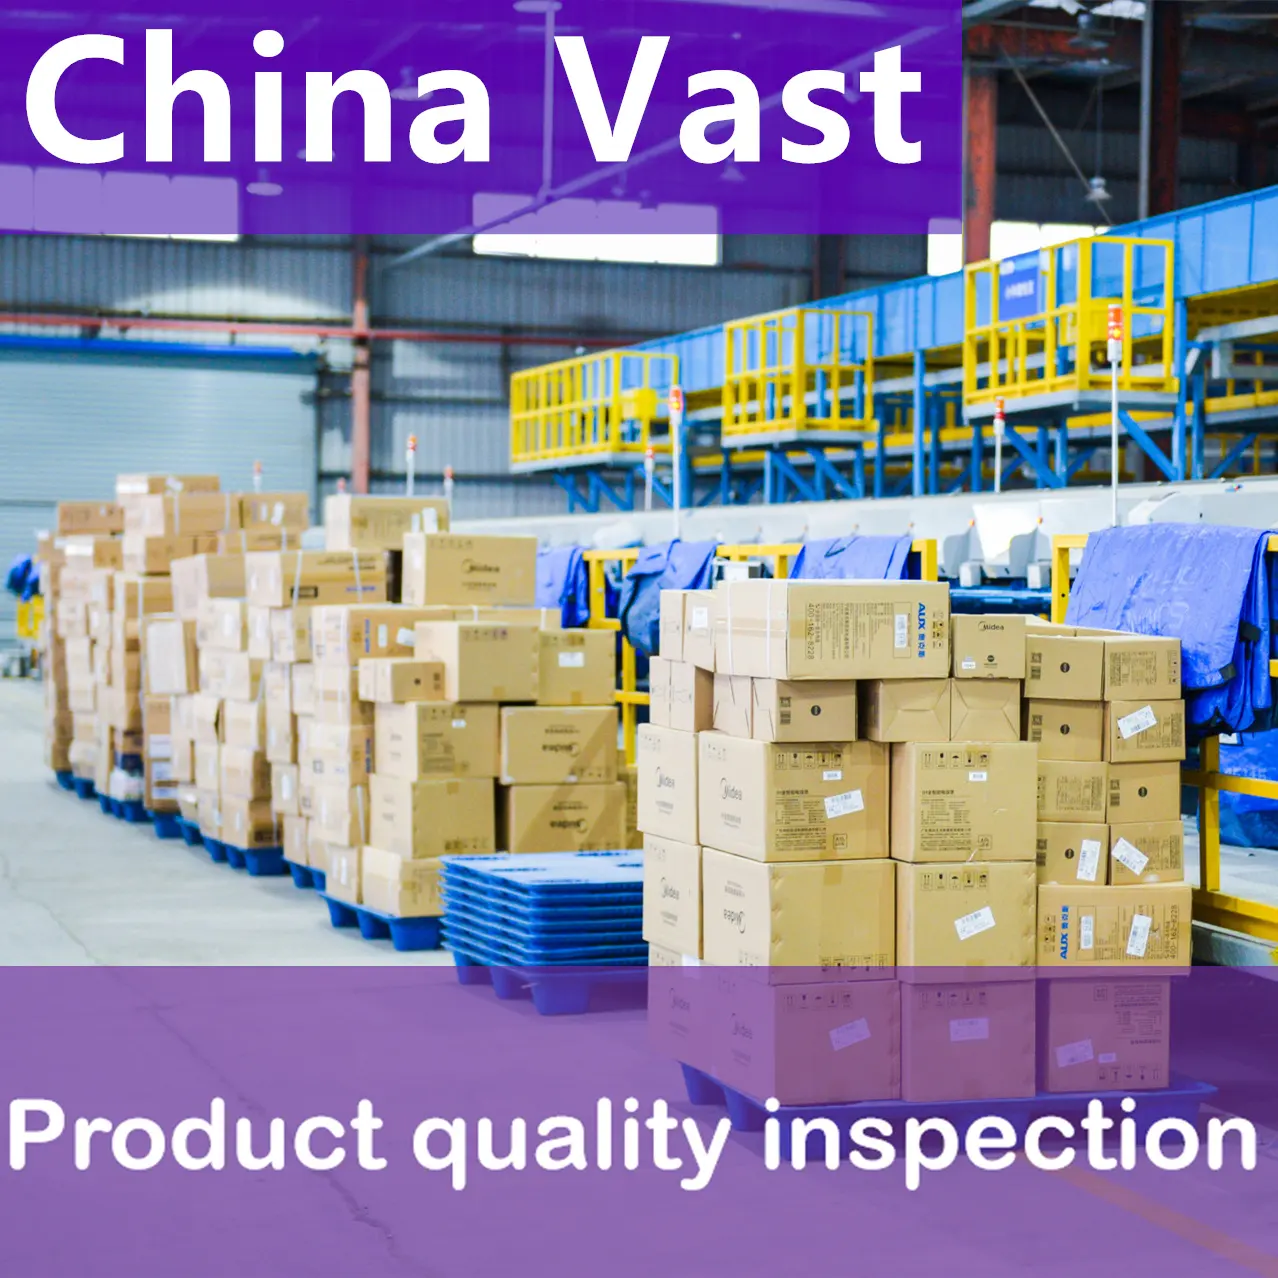 Miglior servizio di ispezione e società di ispezione professionale di terze parti in fabbrica a Qingdao Yiwu Shanghai guangdong